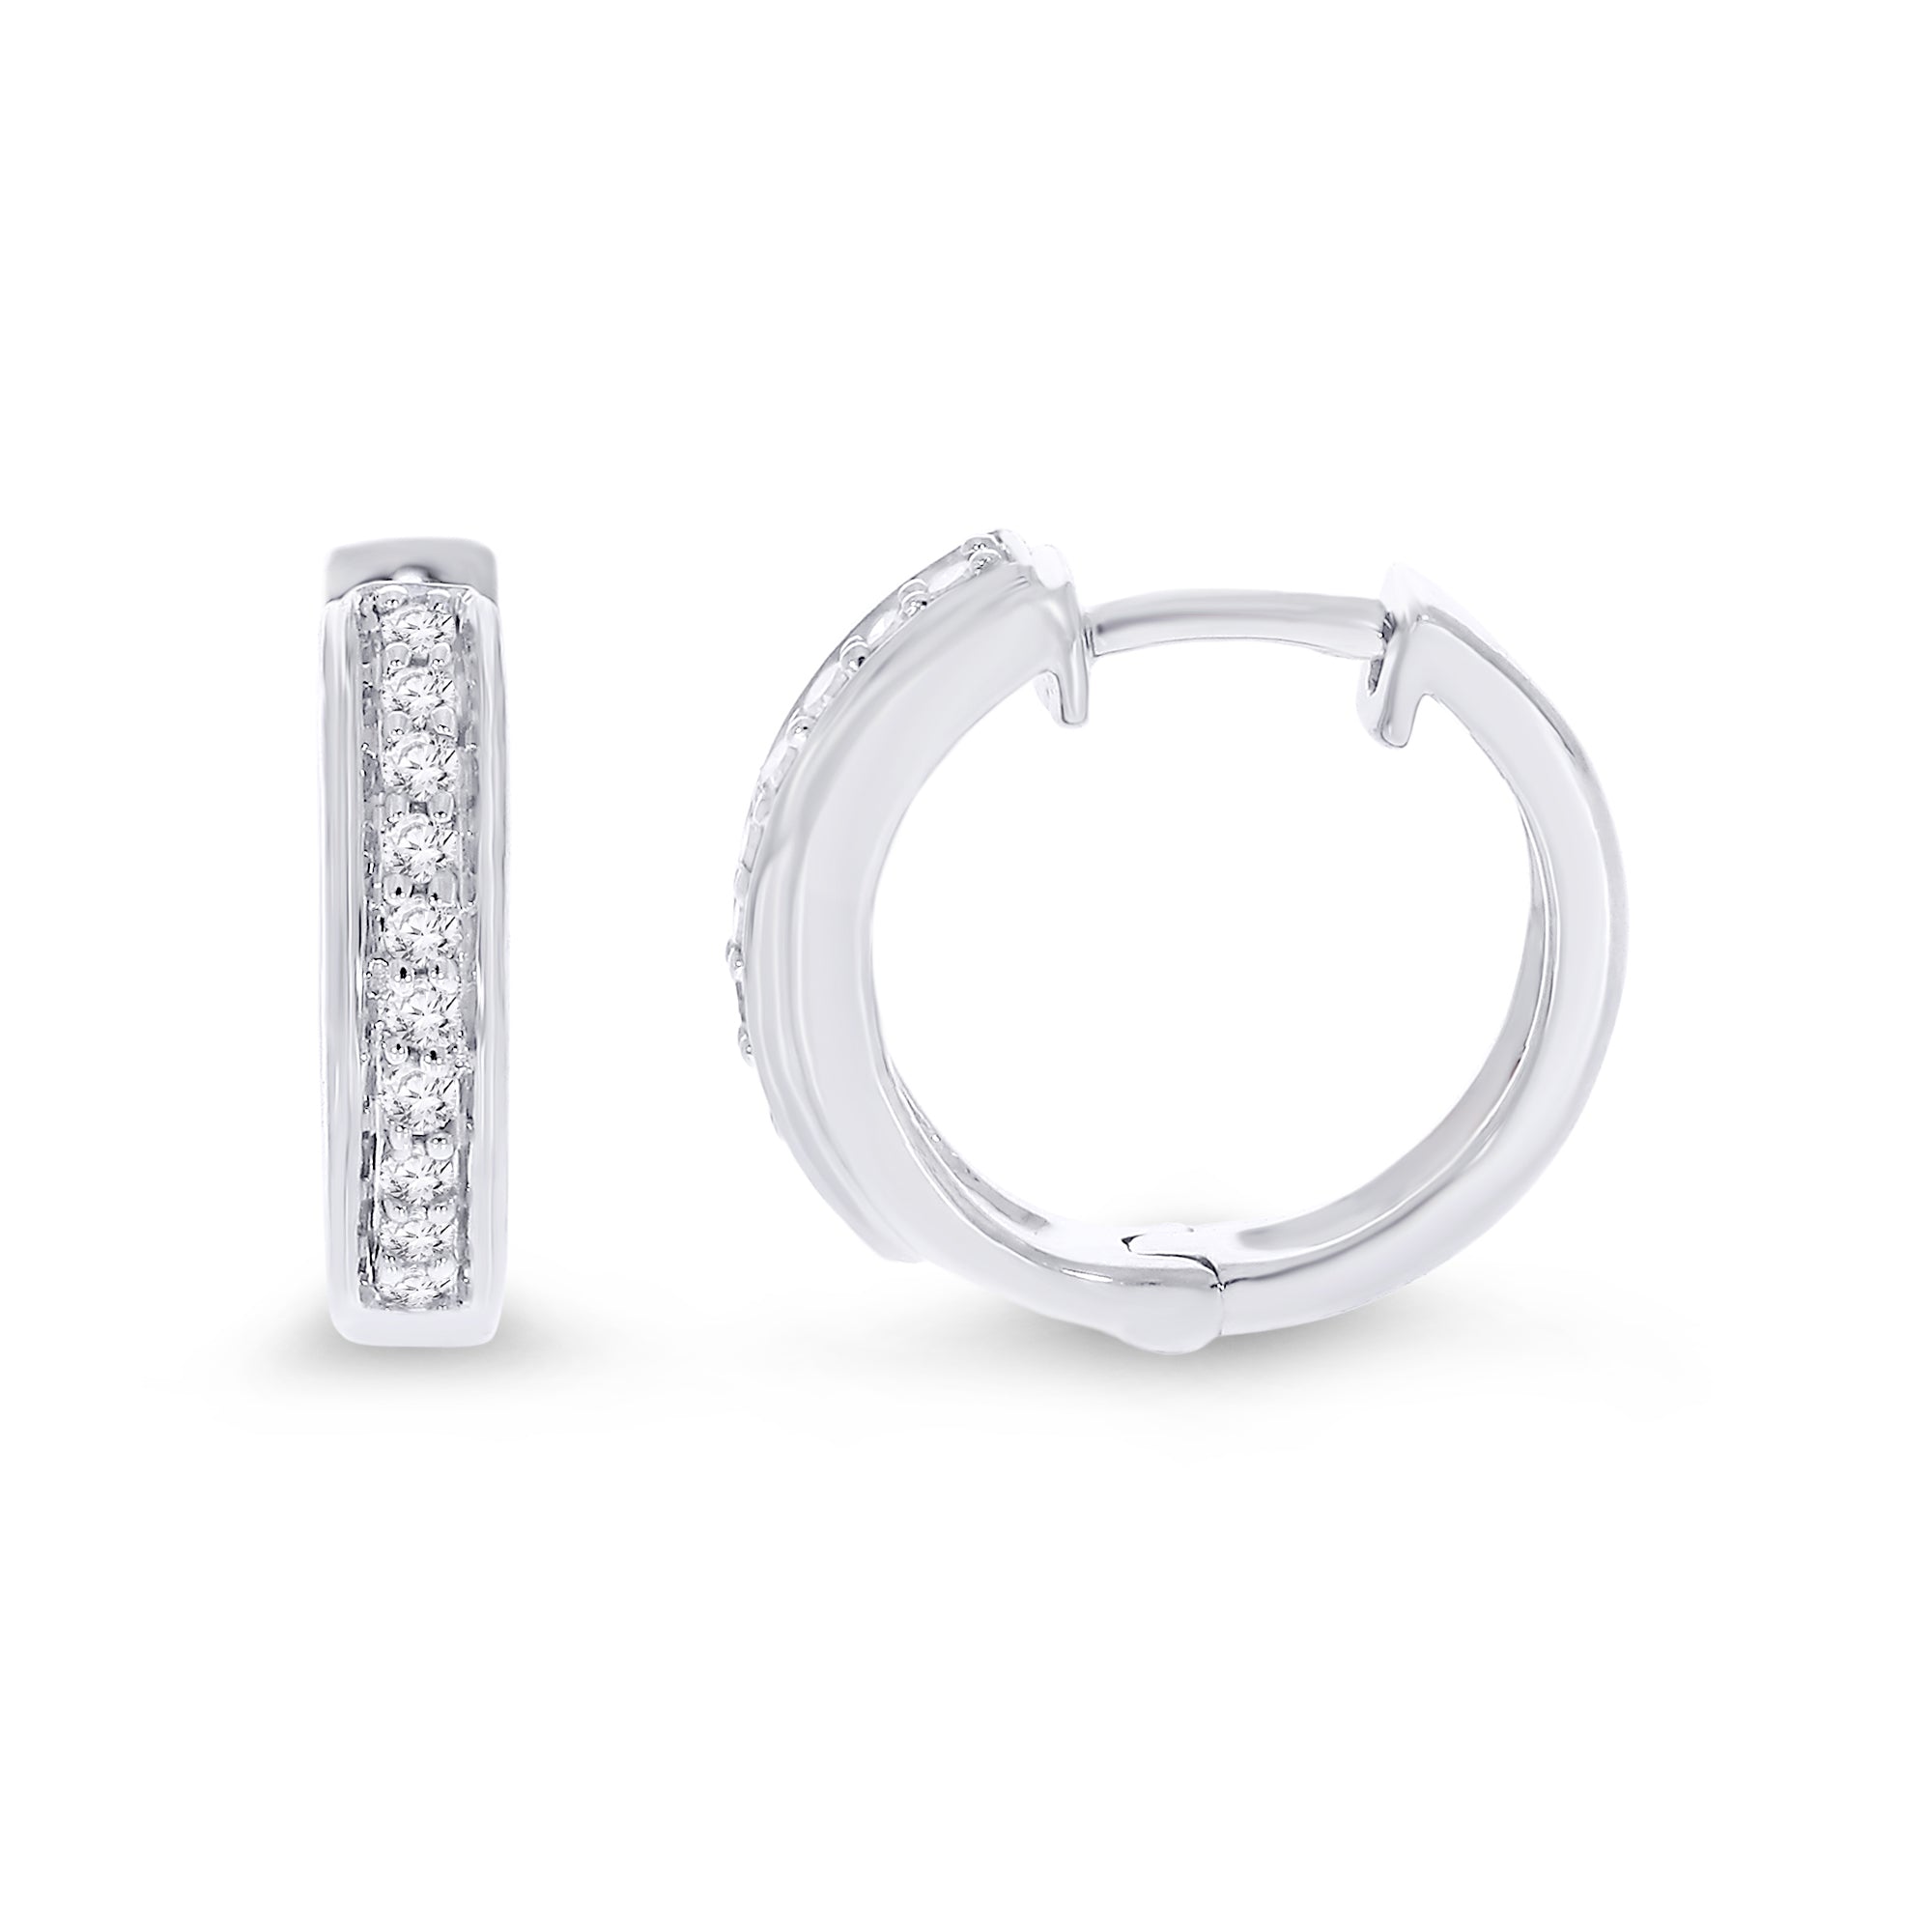 9ct white gold grain set diamond huggy earrings 0.12ct - W2.75 x L12mm